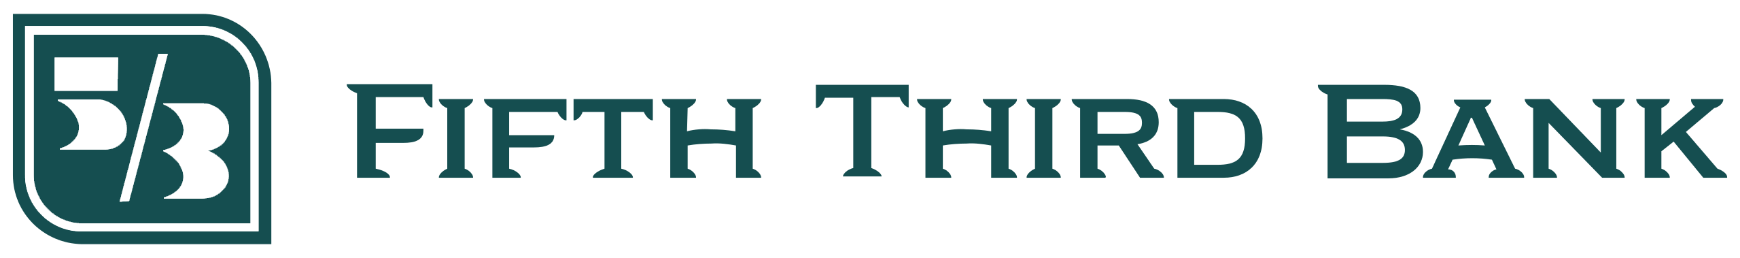 Fifth Third Logo